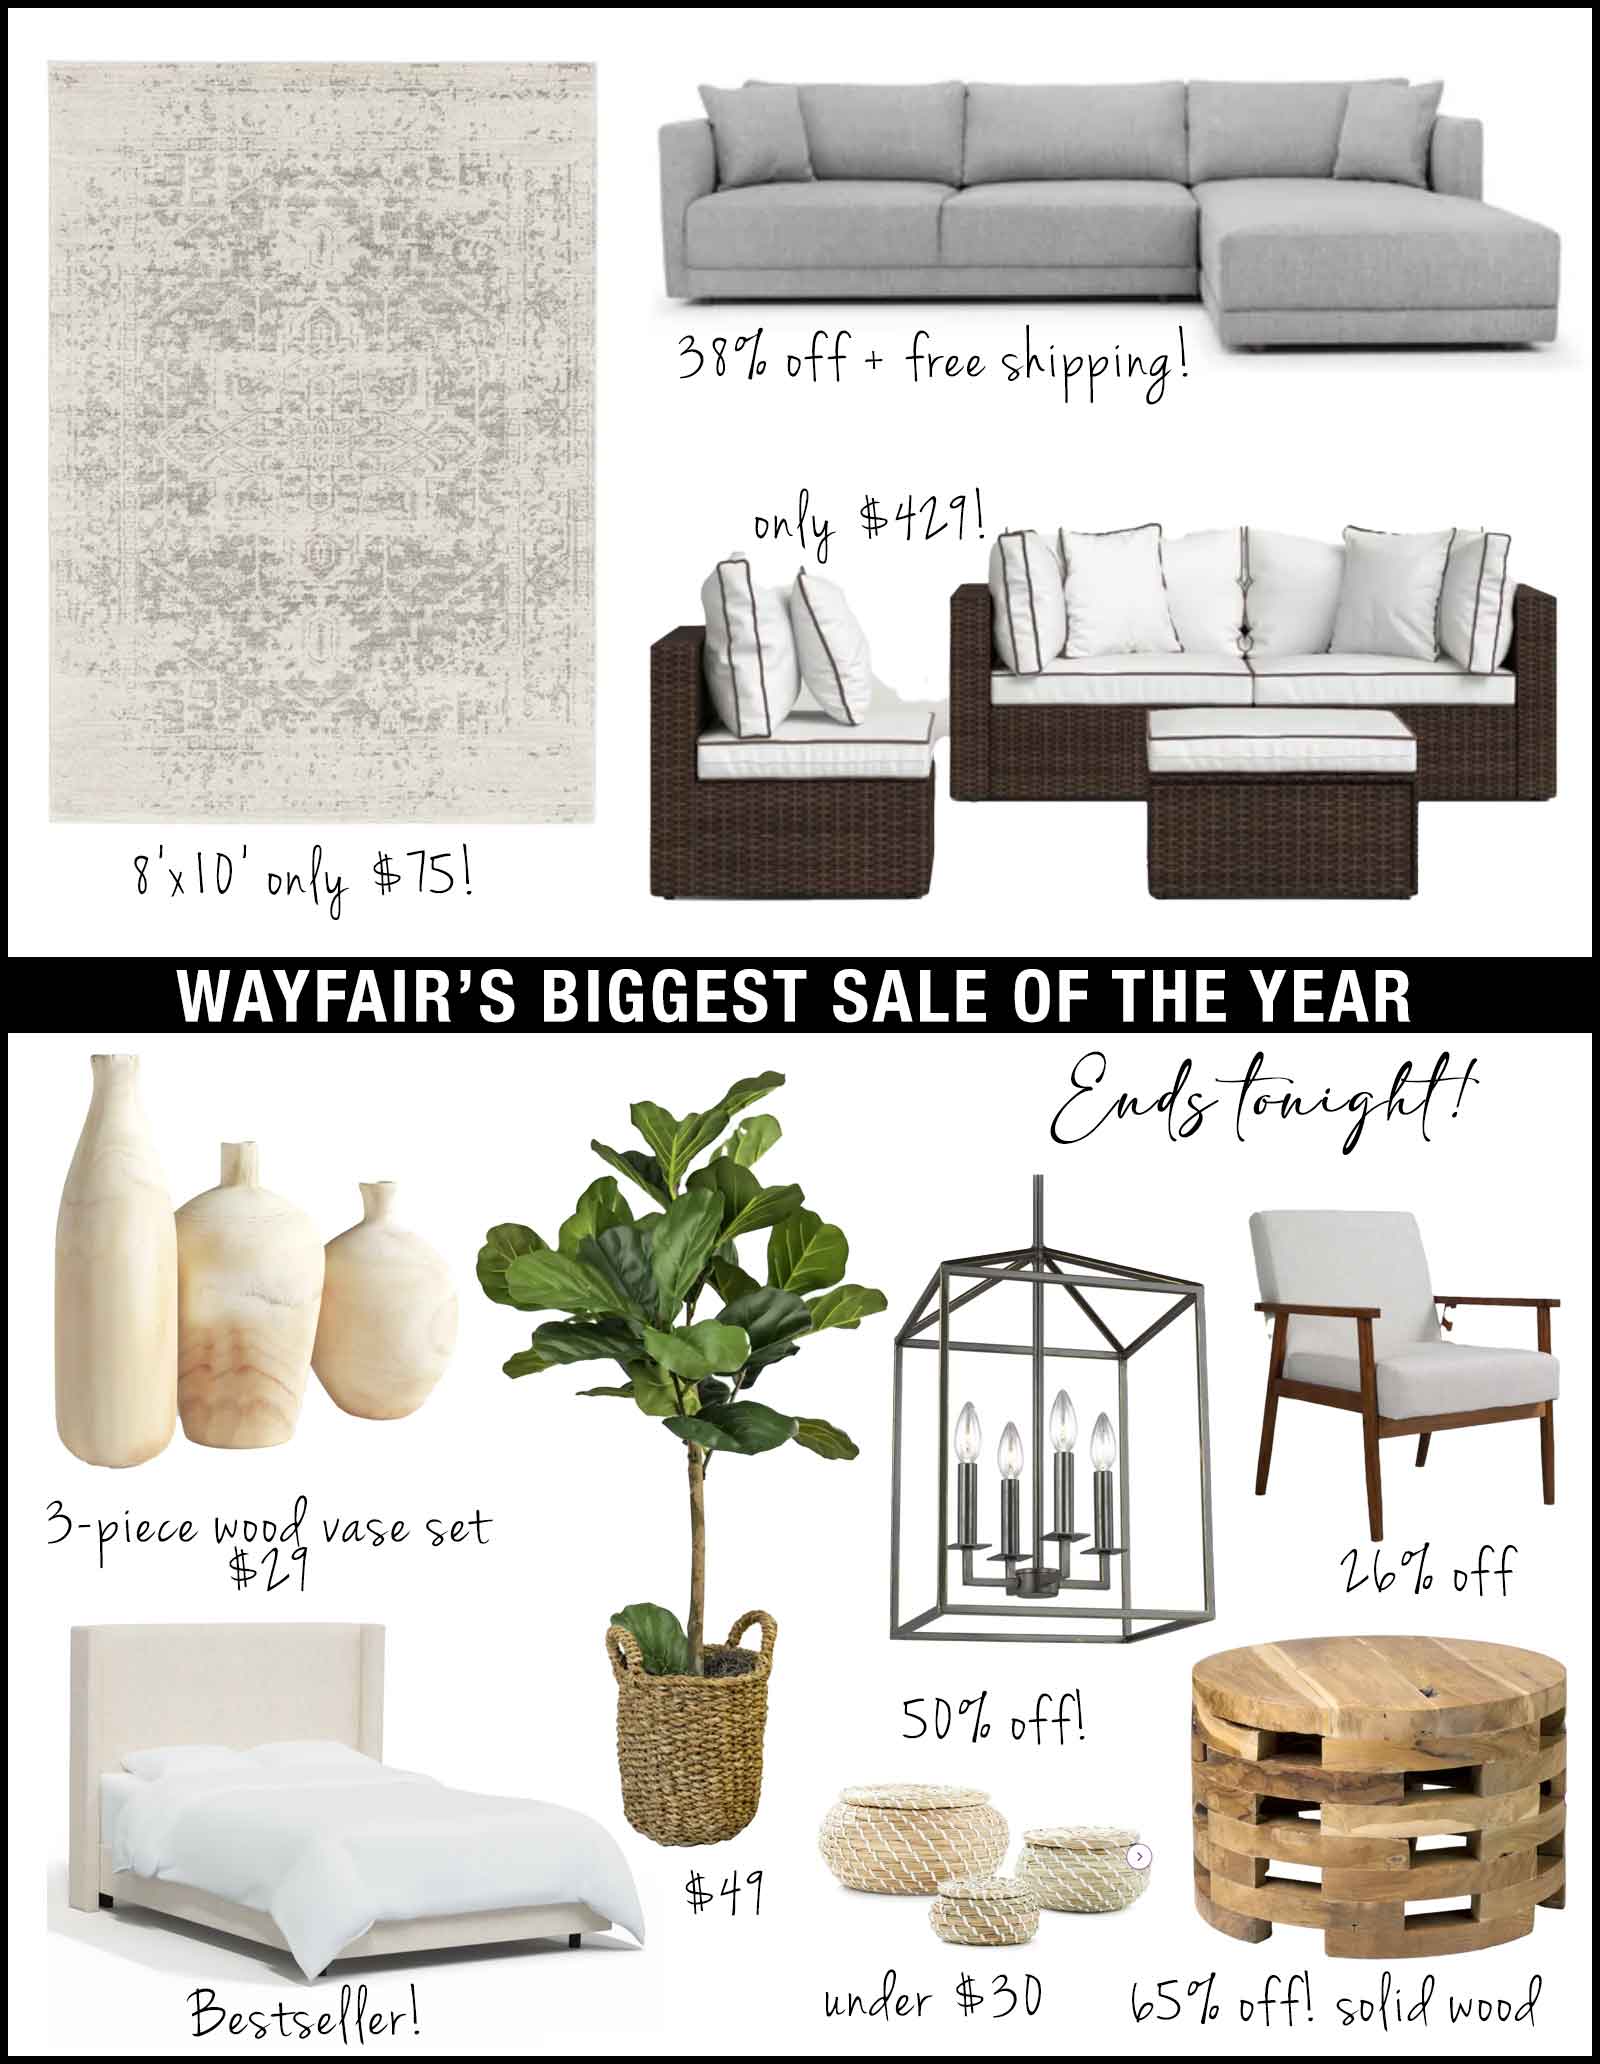 Wayfair's biggest sale of the year